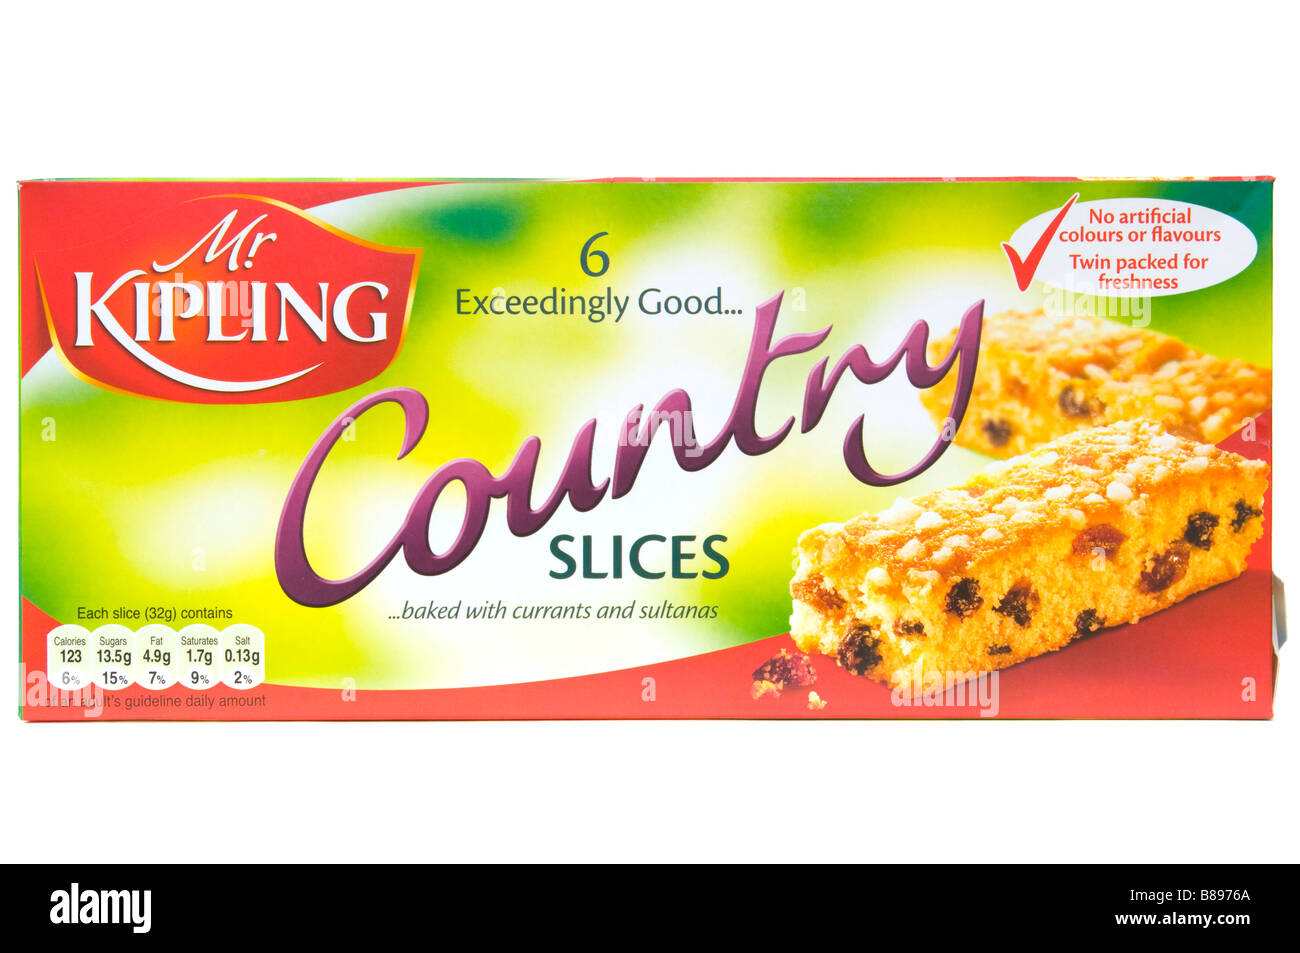 Box of Mr Kipling Country Slices Cake Cakes Stock Photo - Alamy